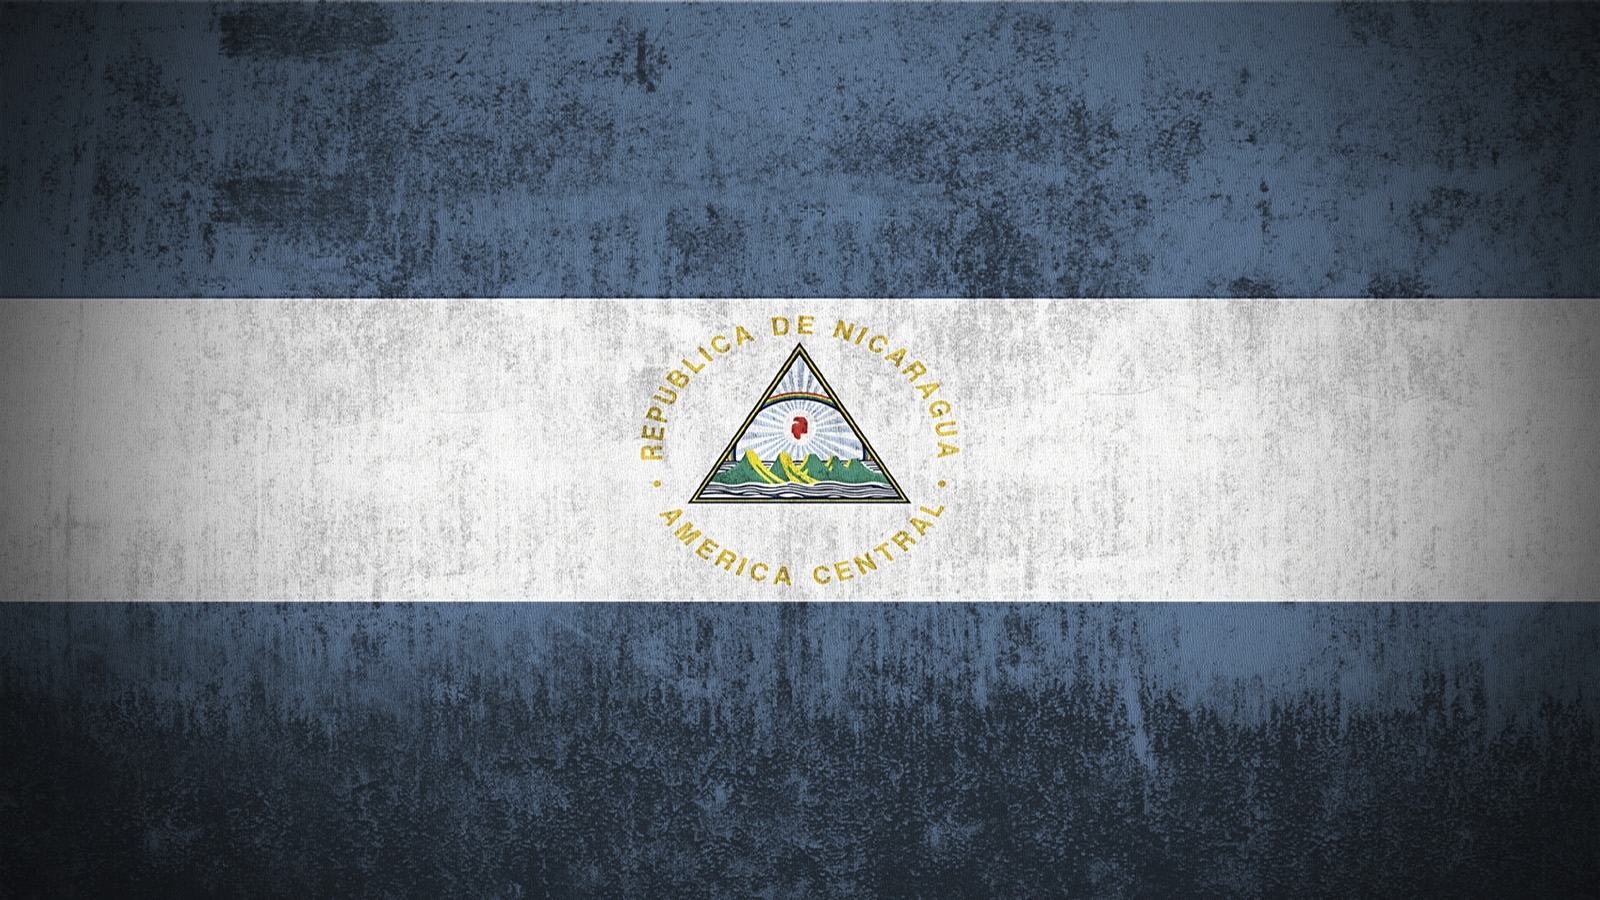 Weathered Flag Of Nicaragua, fabric textured